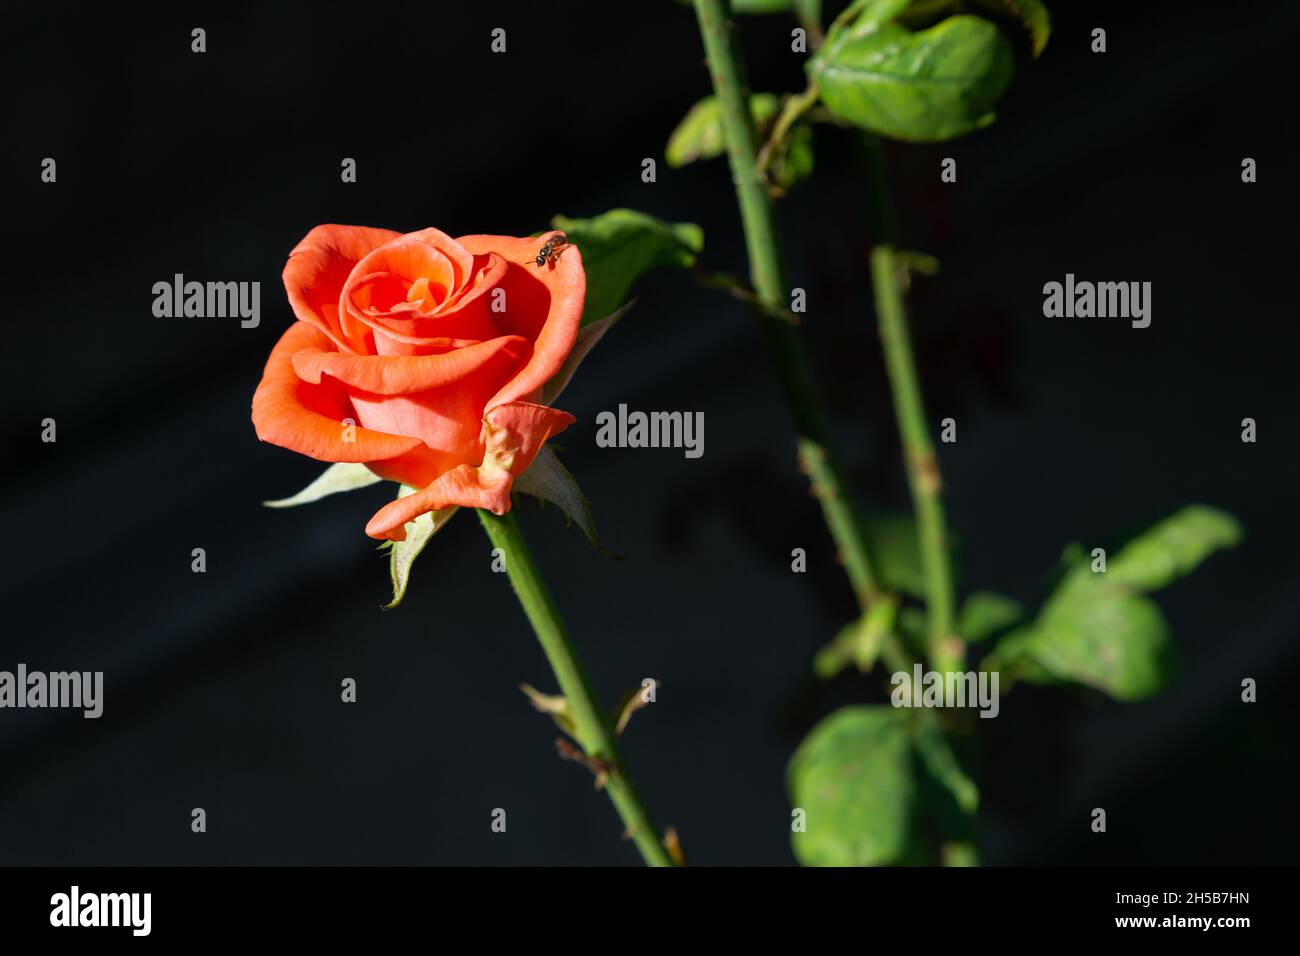 Freshly bloomed orange rose. The orange rose represents desire, enthusiasm and pride. Stock Photo